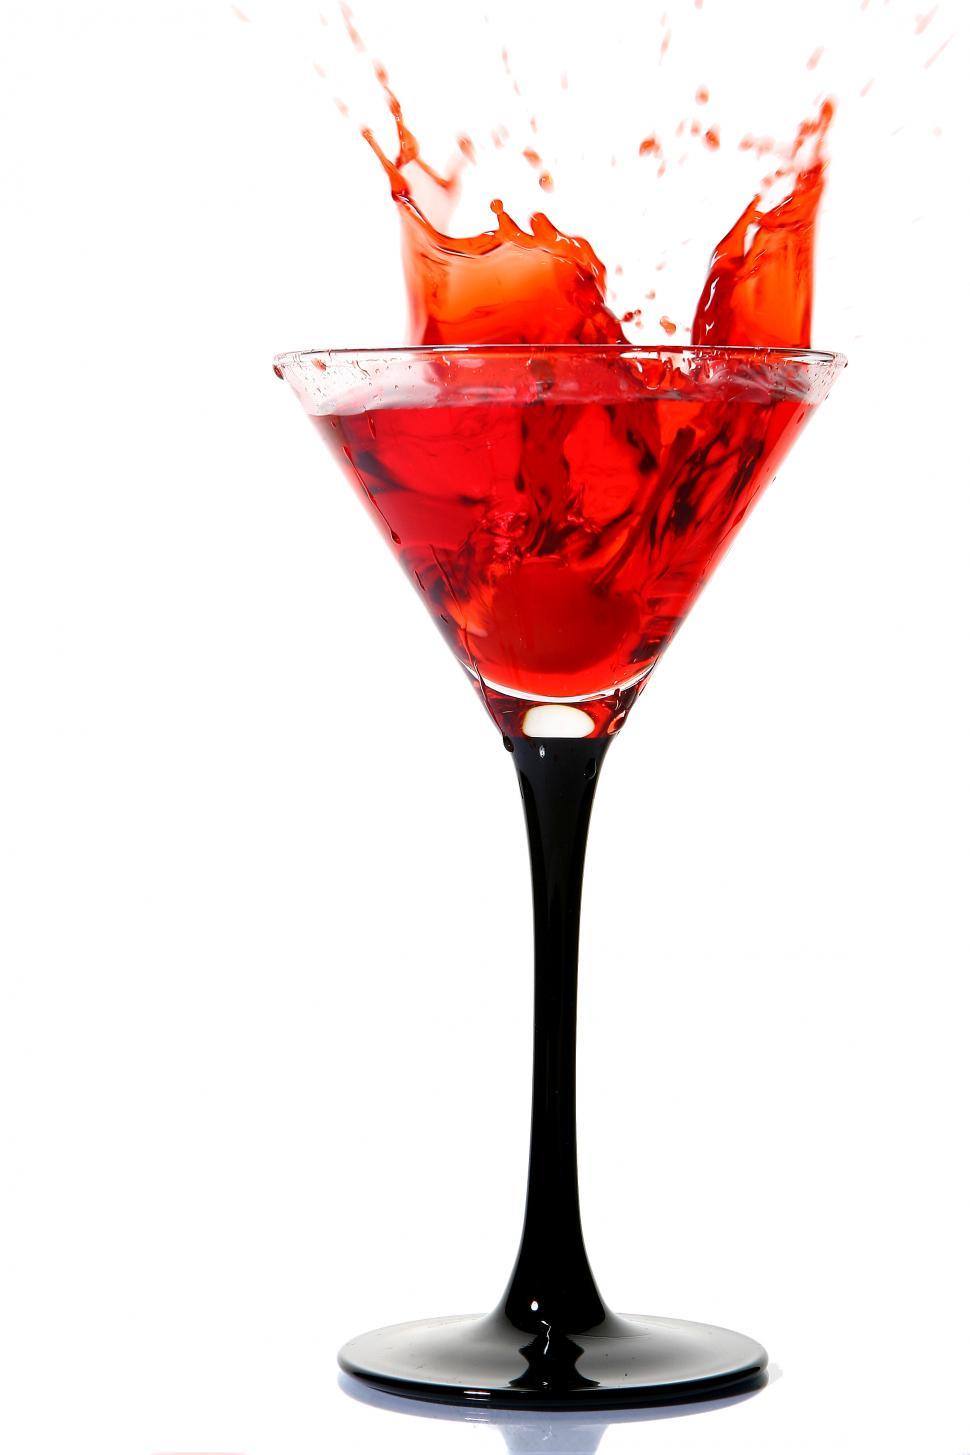 Free Image of Cherry Splash into Cocktail 